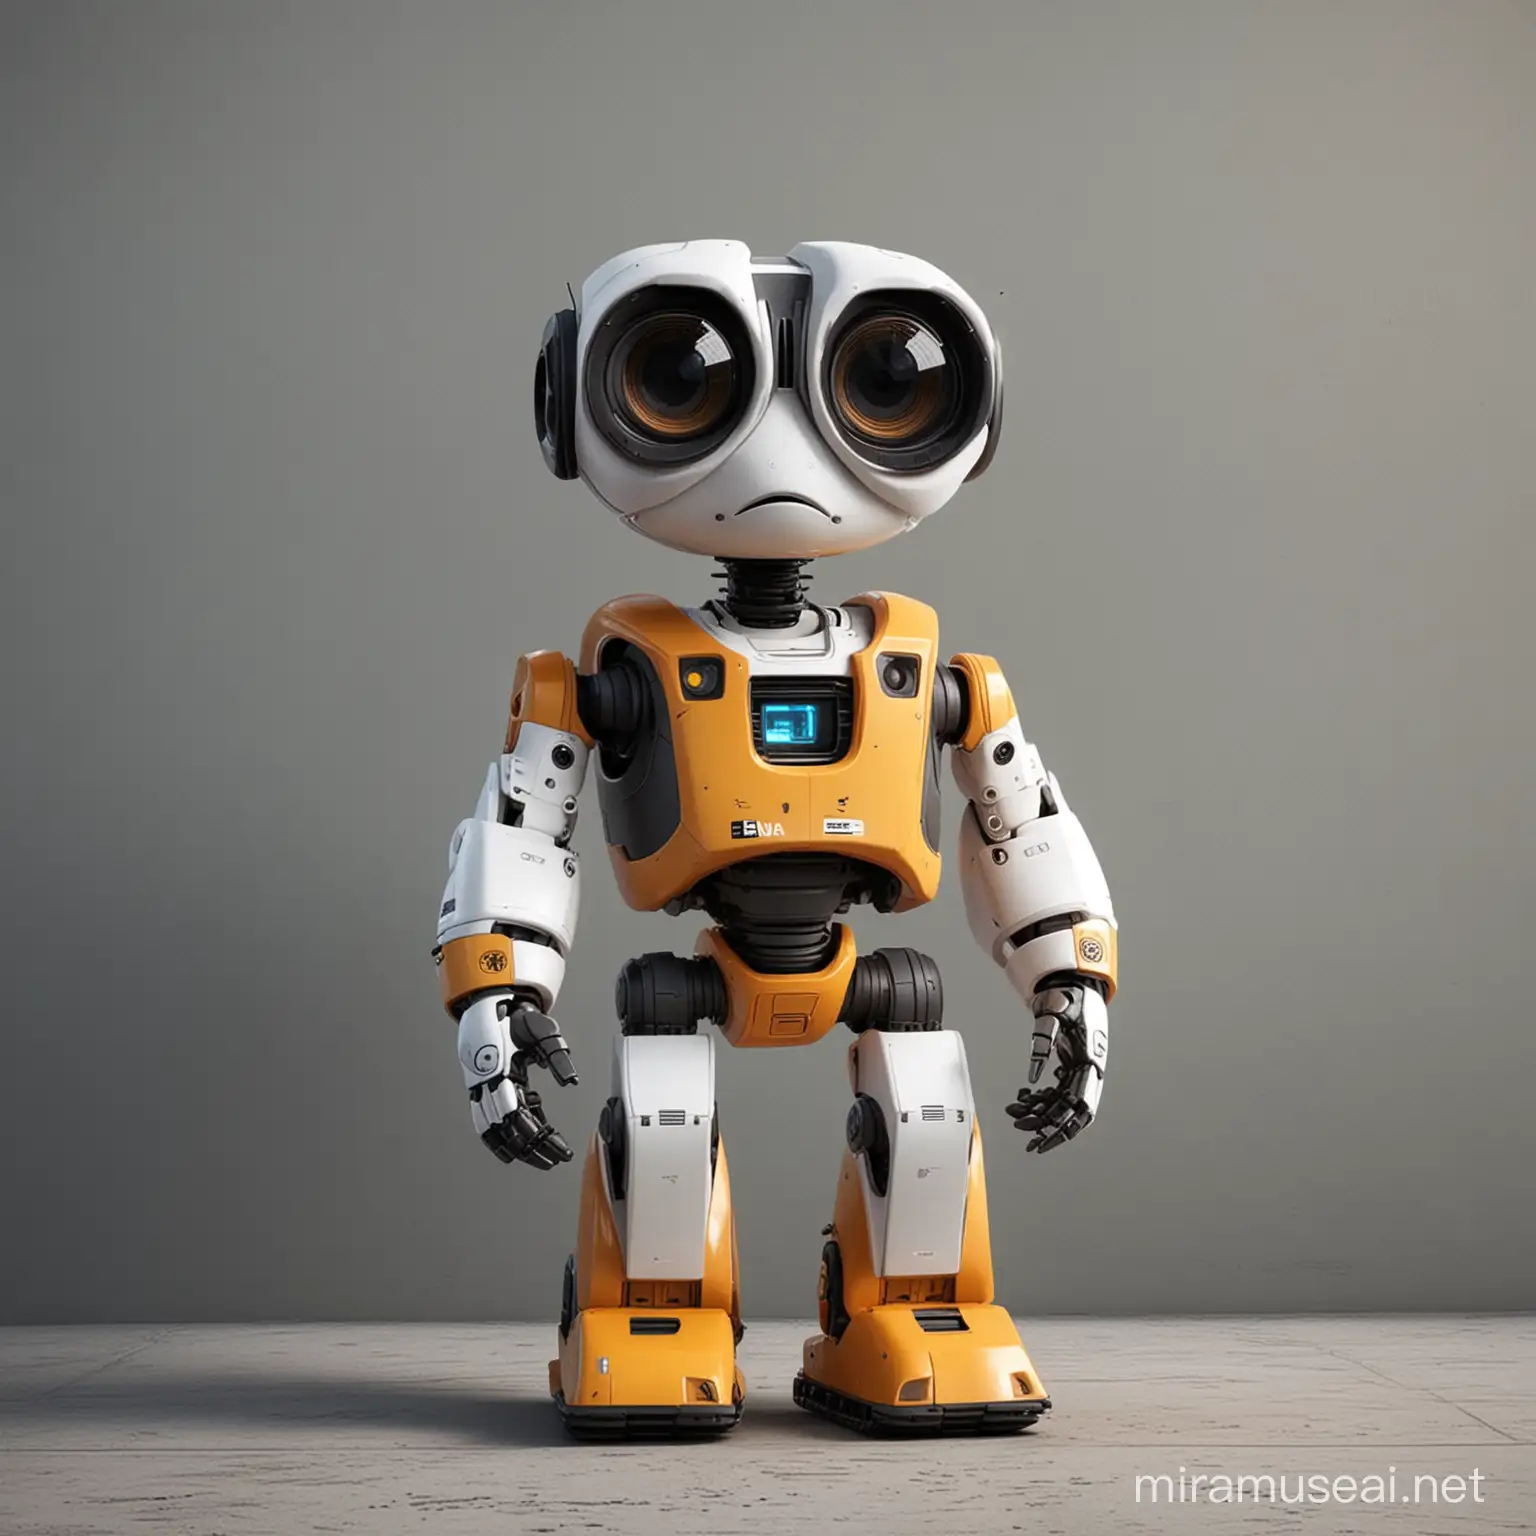 3d realistic Digital mascot similar like Eva robot in Wall-e movie